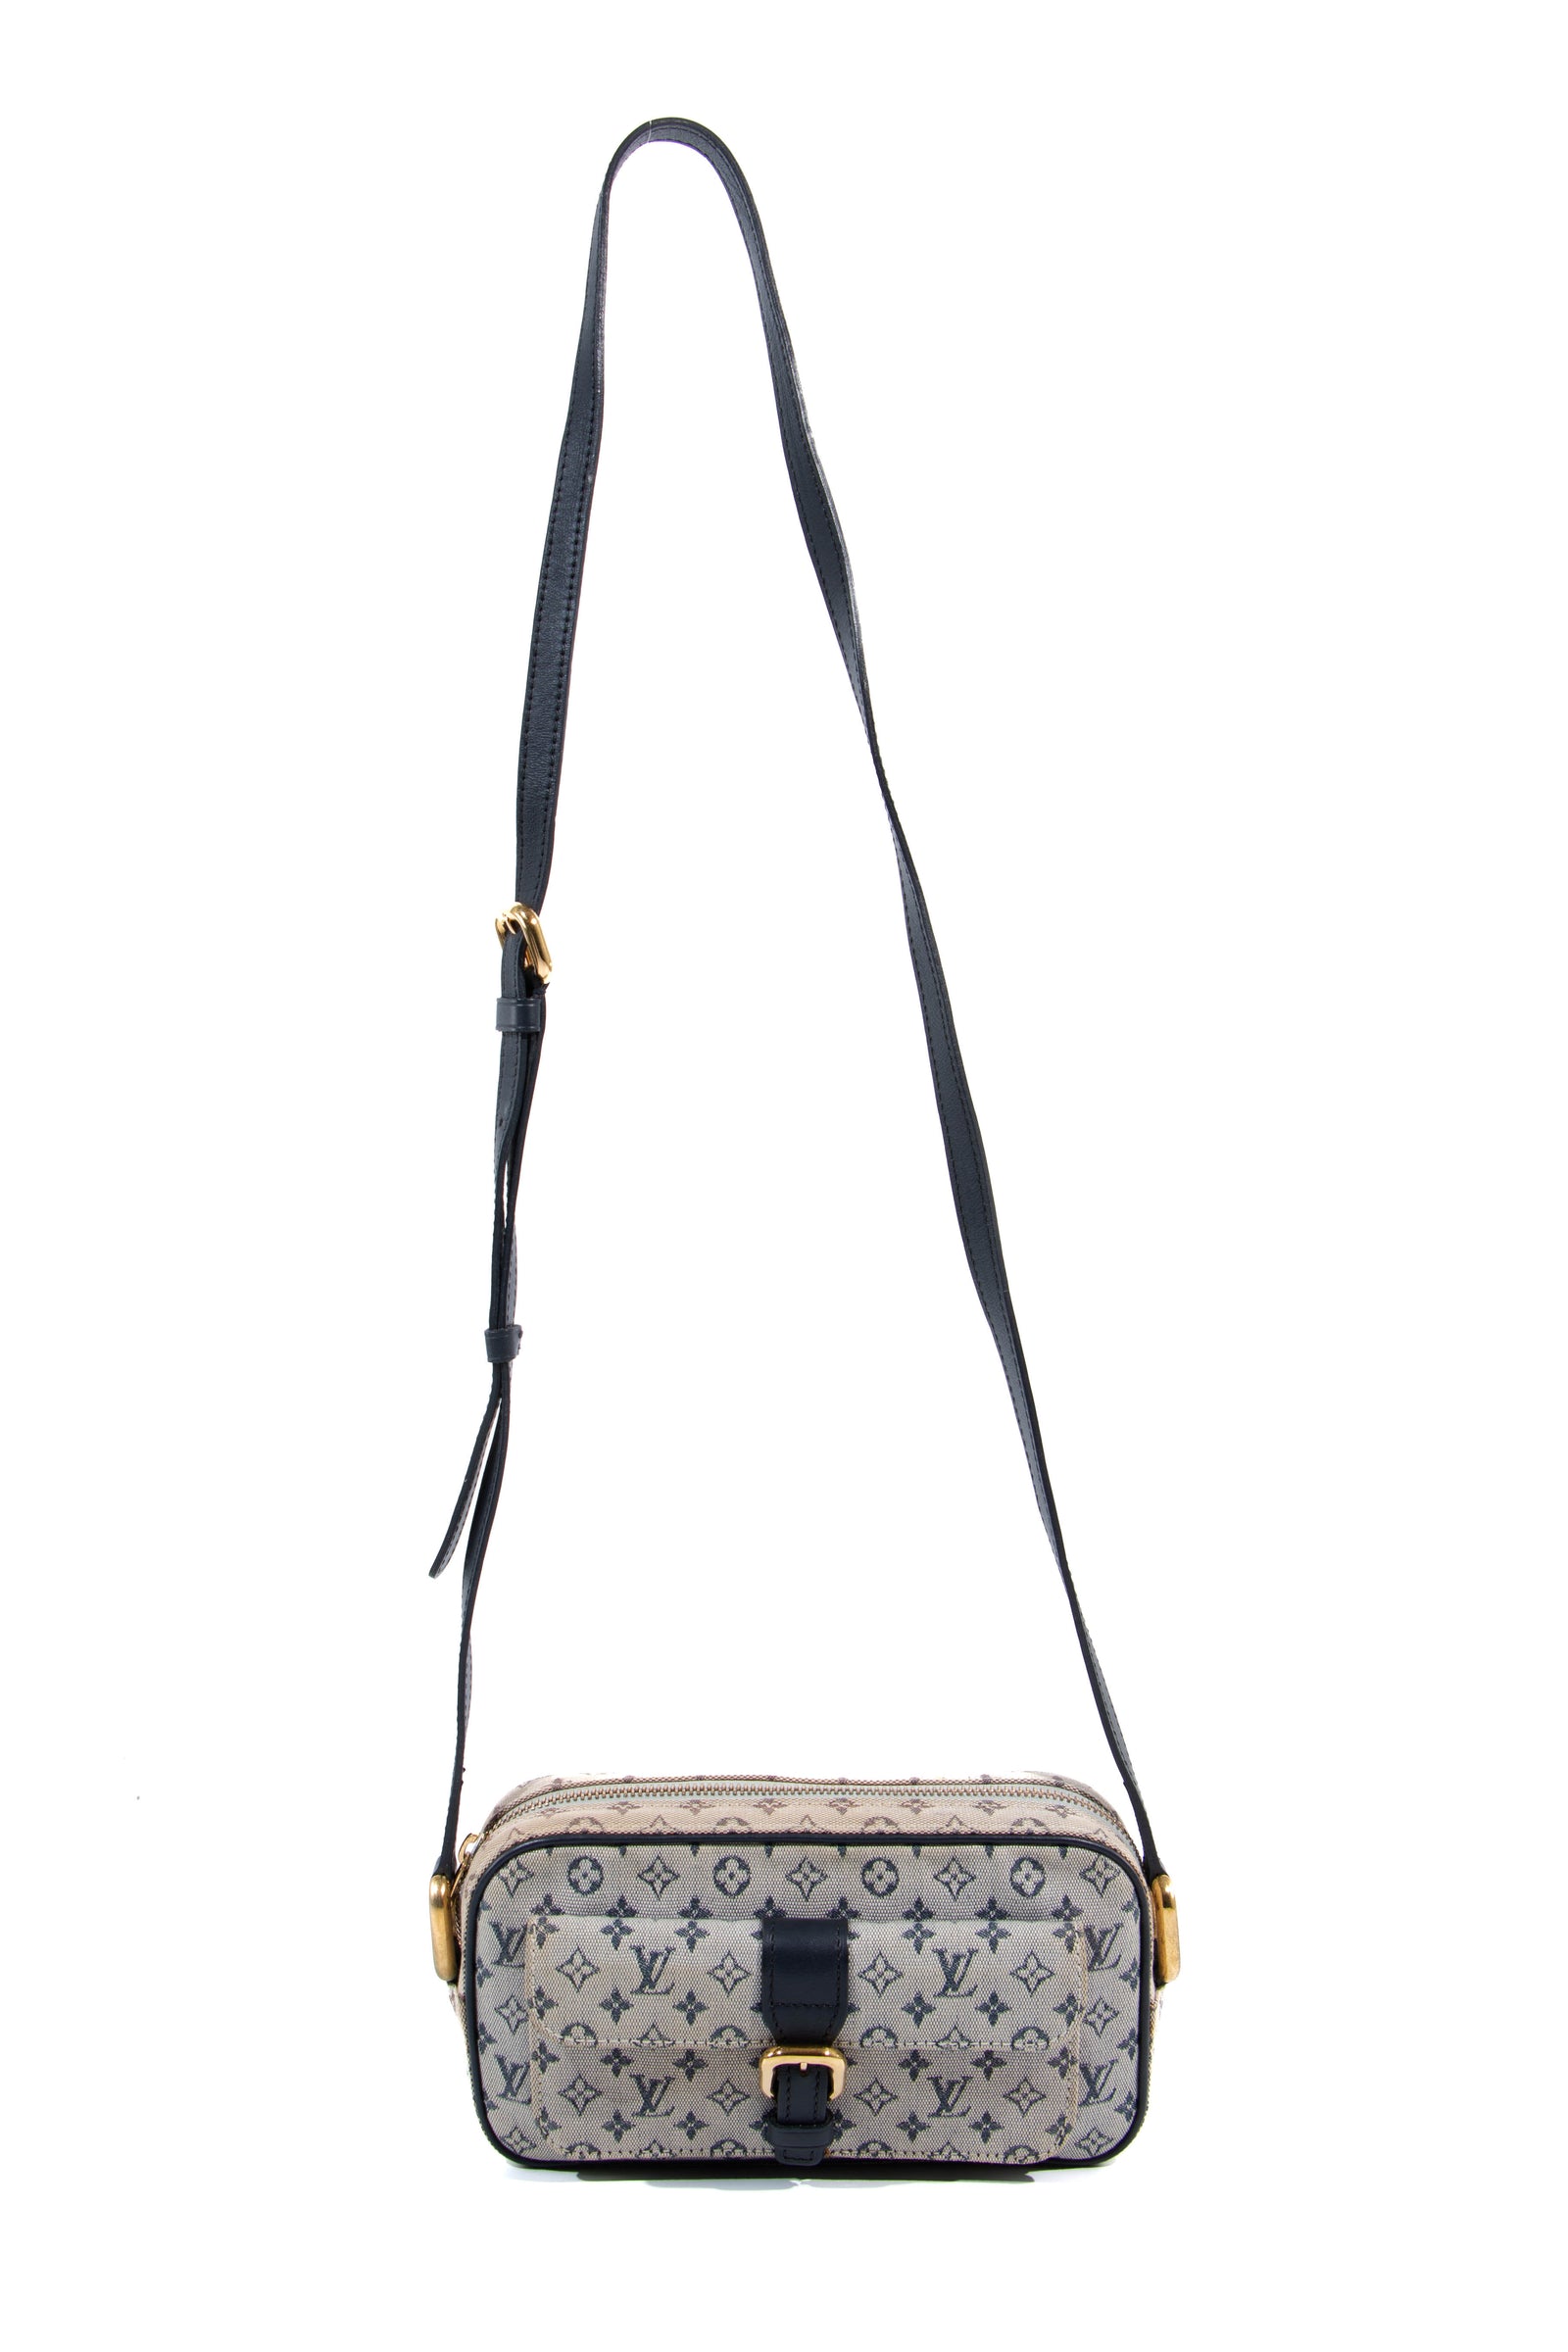 Louis Vuitton Bags Start at $450 at This Vintage Sample Sale Slash Designer  Fantasy Land - Racked NY